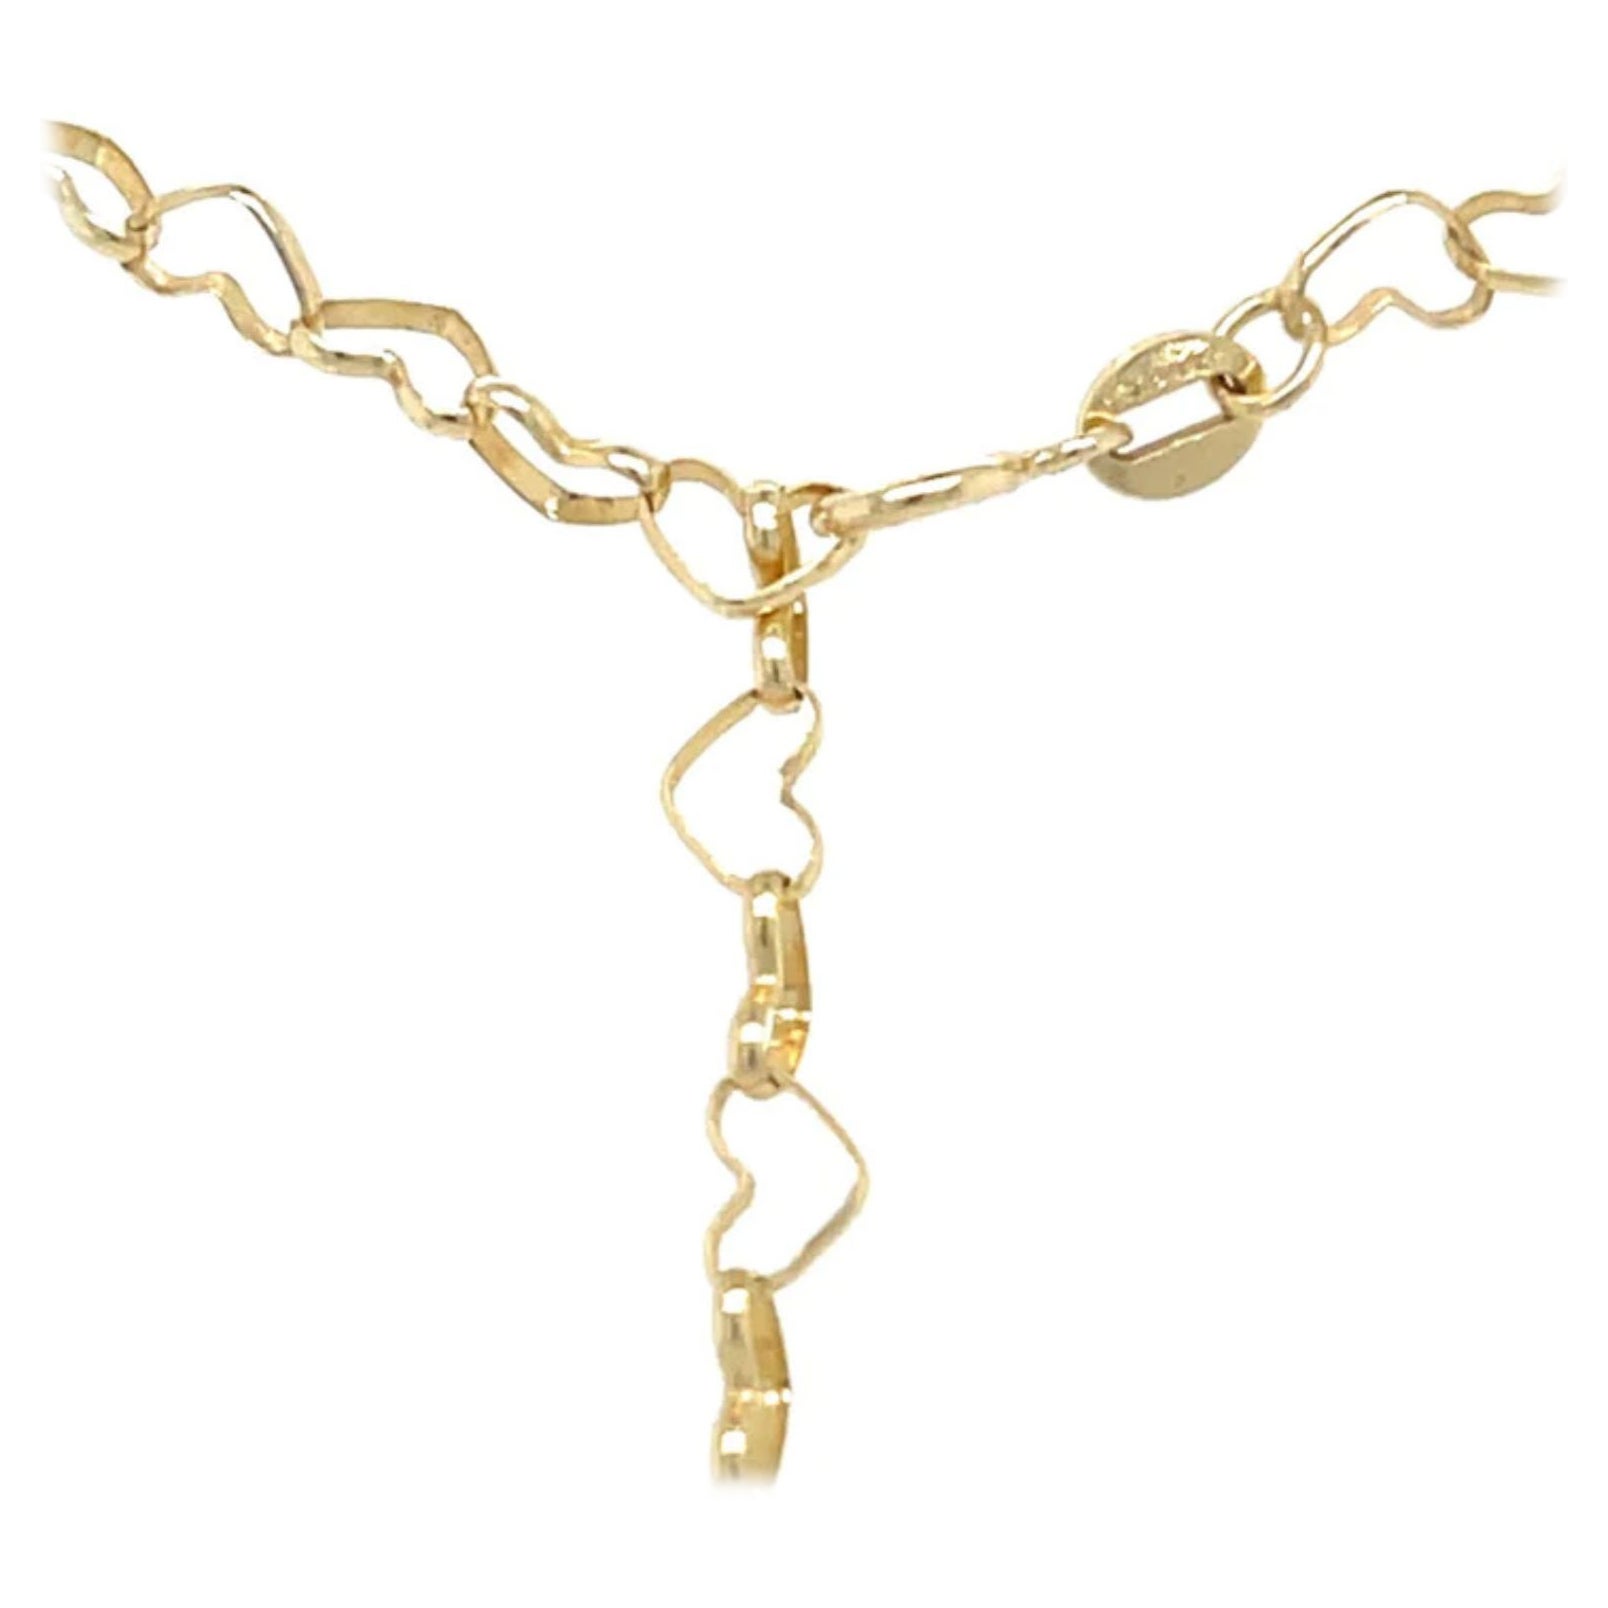 14K Yellow Gold Interlocking Hearts Chain Necklace, Size 16